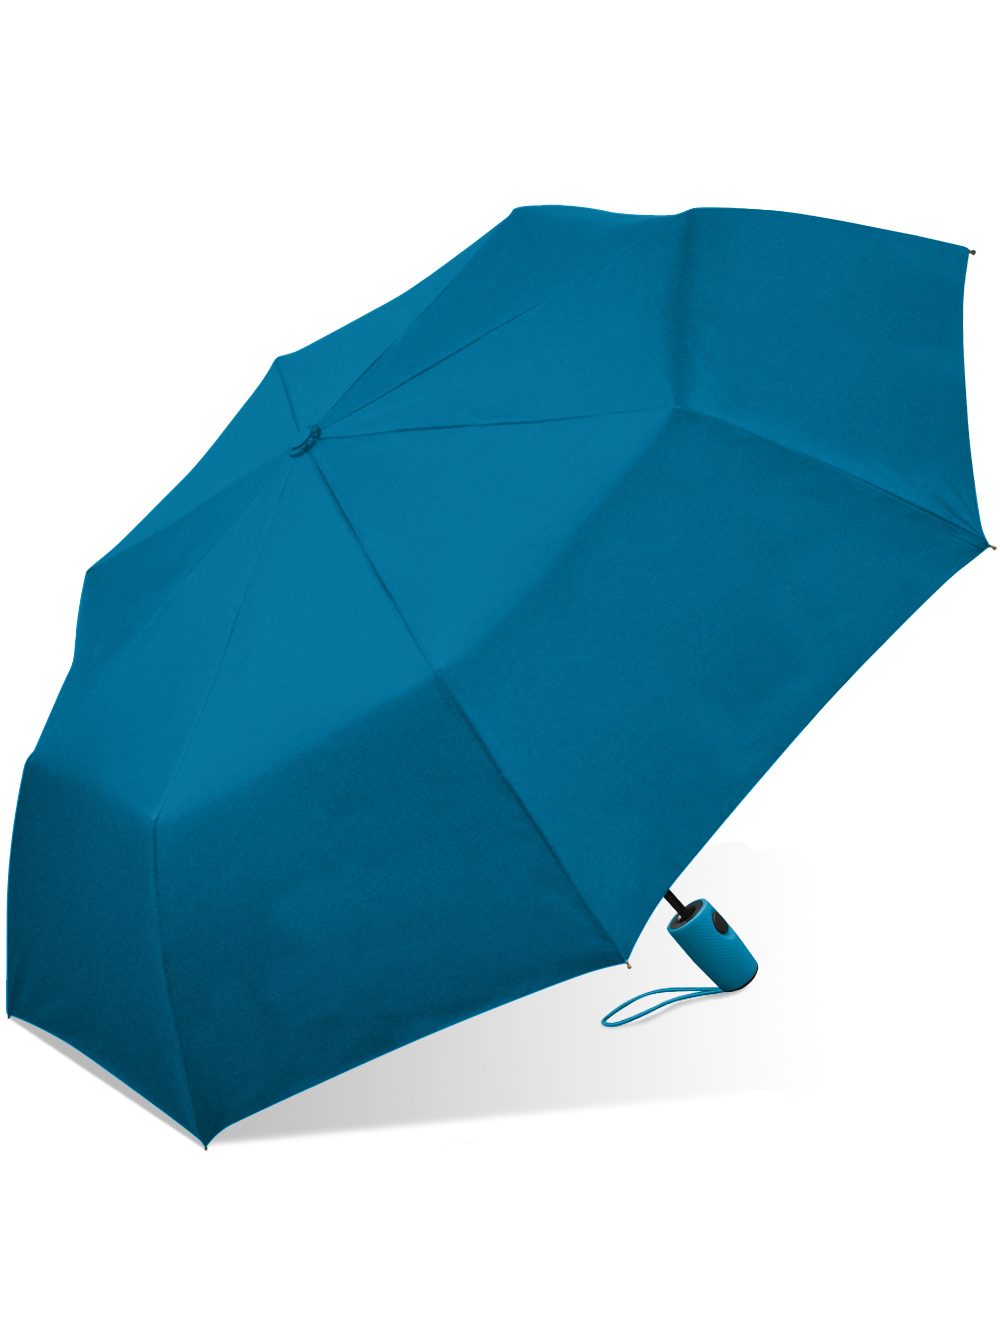 Weather Station Automatic Super Mini Rain Umbrella Teal - image 1 of 5